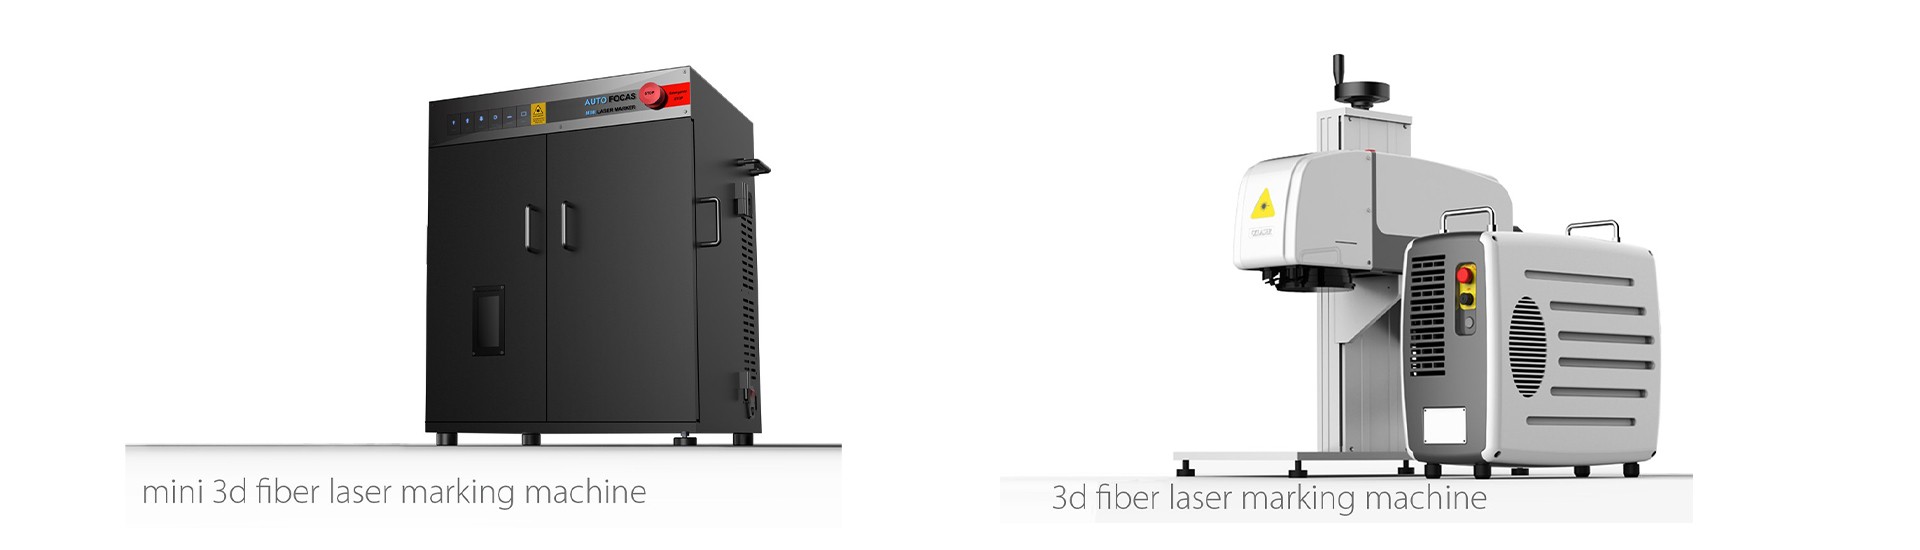 3D portable fiber laser marking machine, 3D Mini fiber laser marking machine